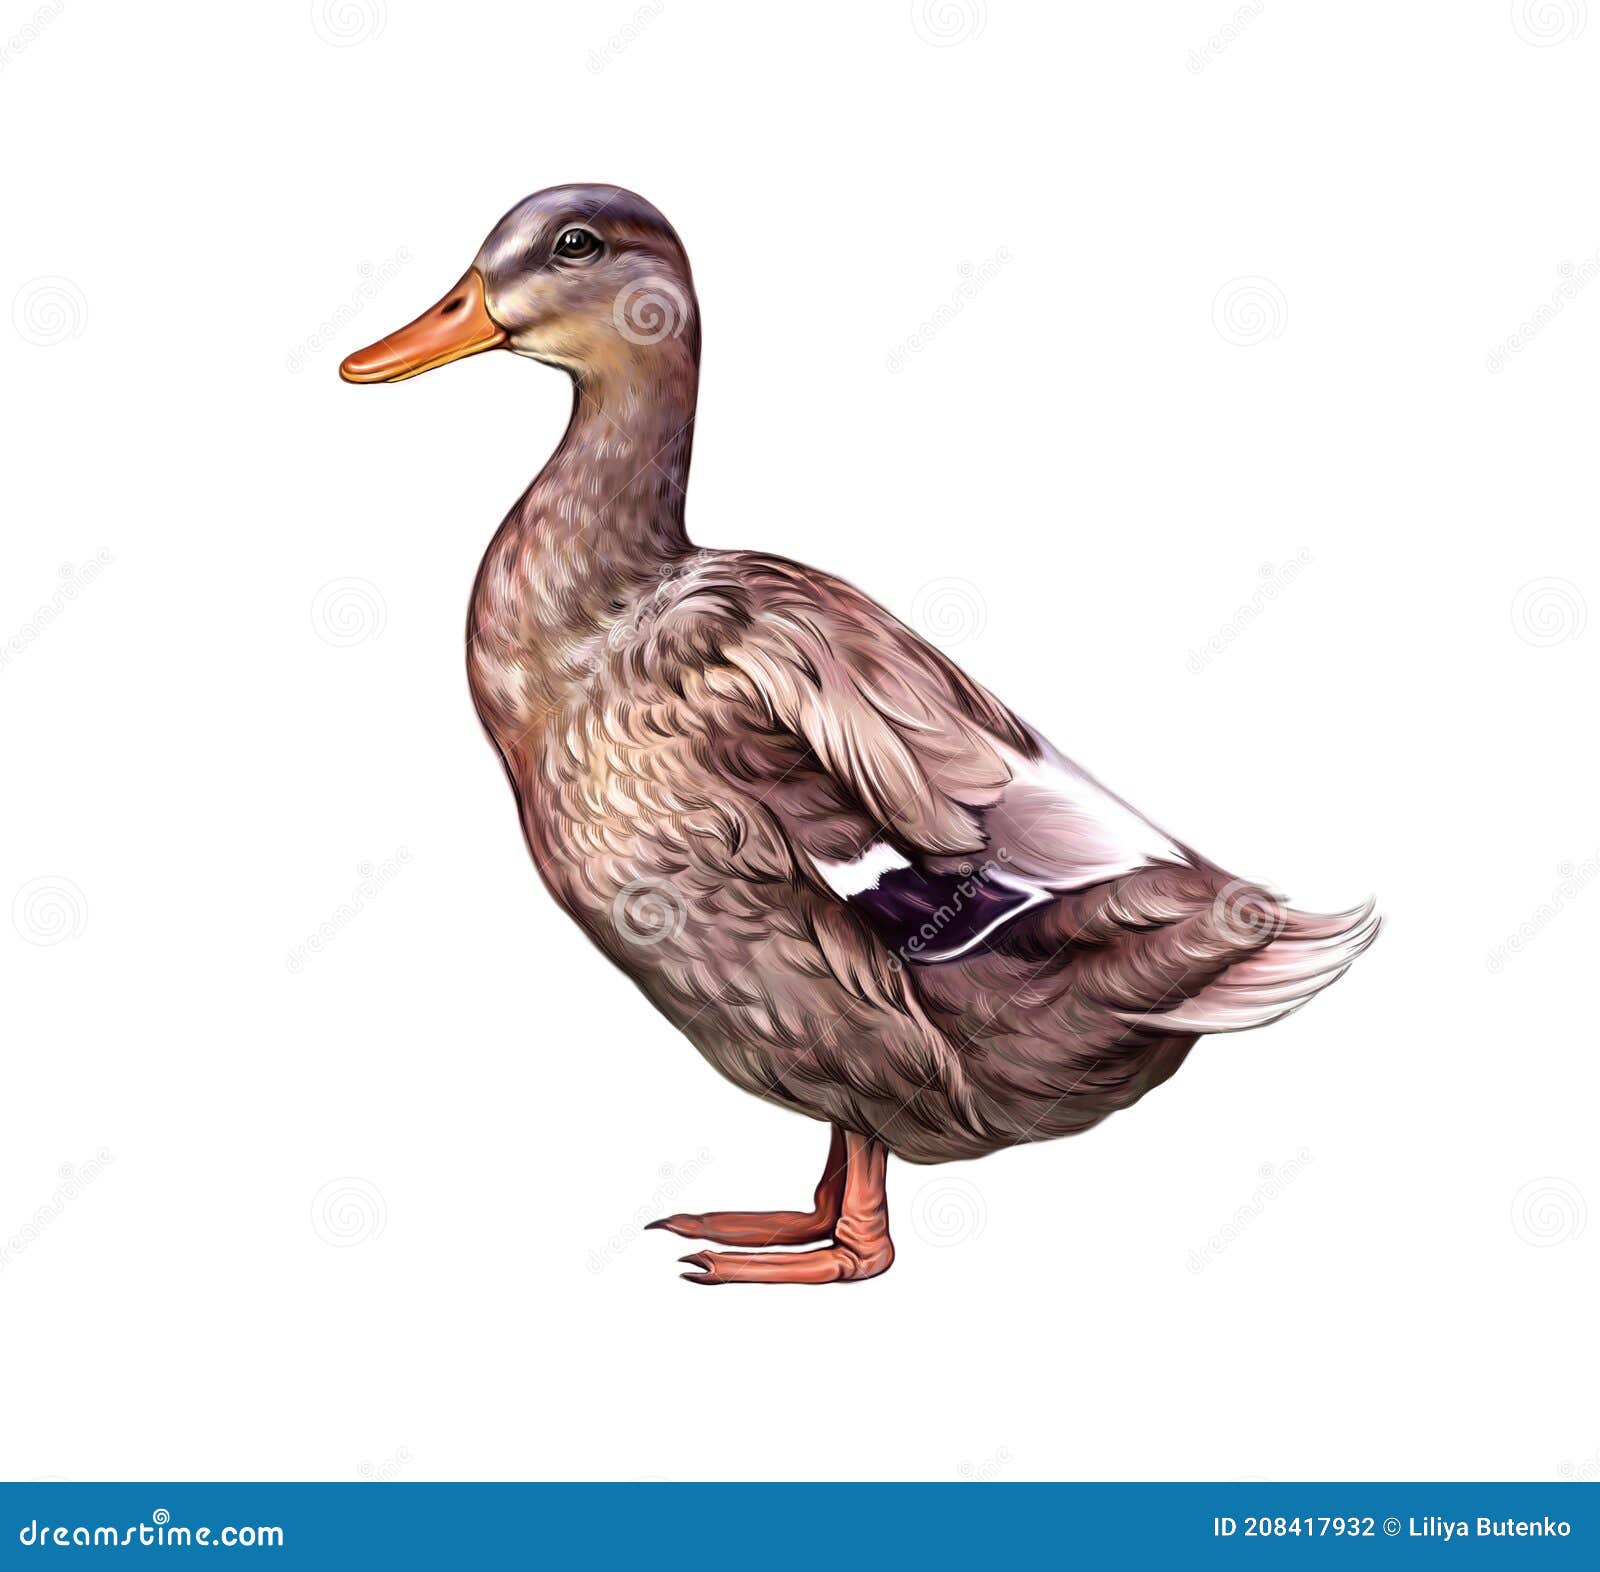 the duck anas platyrhynchos domesticus